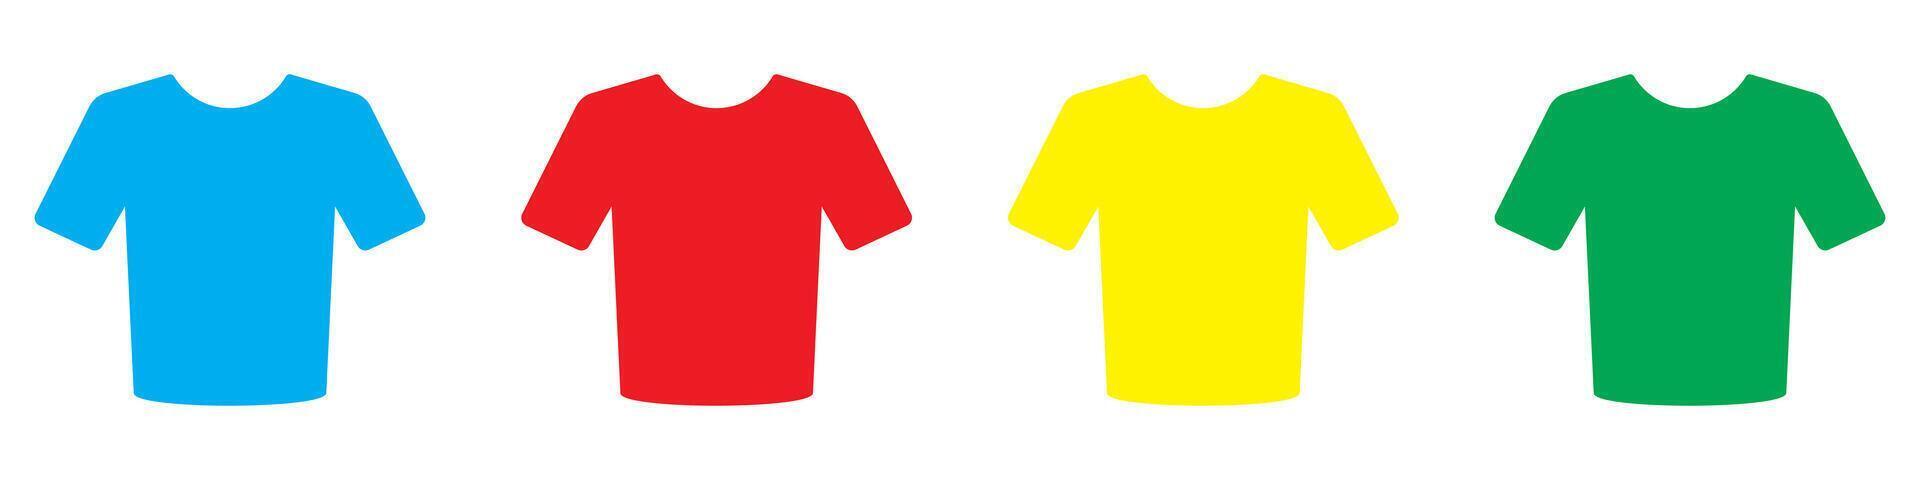 T-shirt template design. Four colors set. FVector illustration. vector